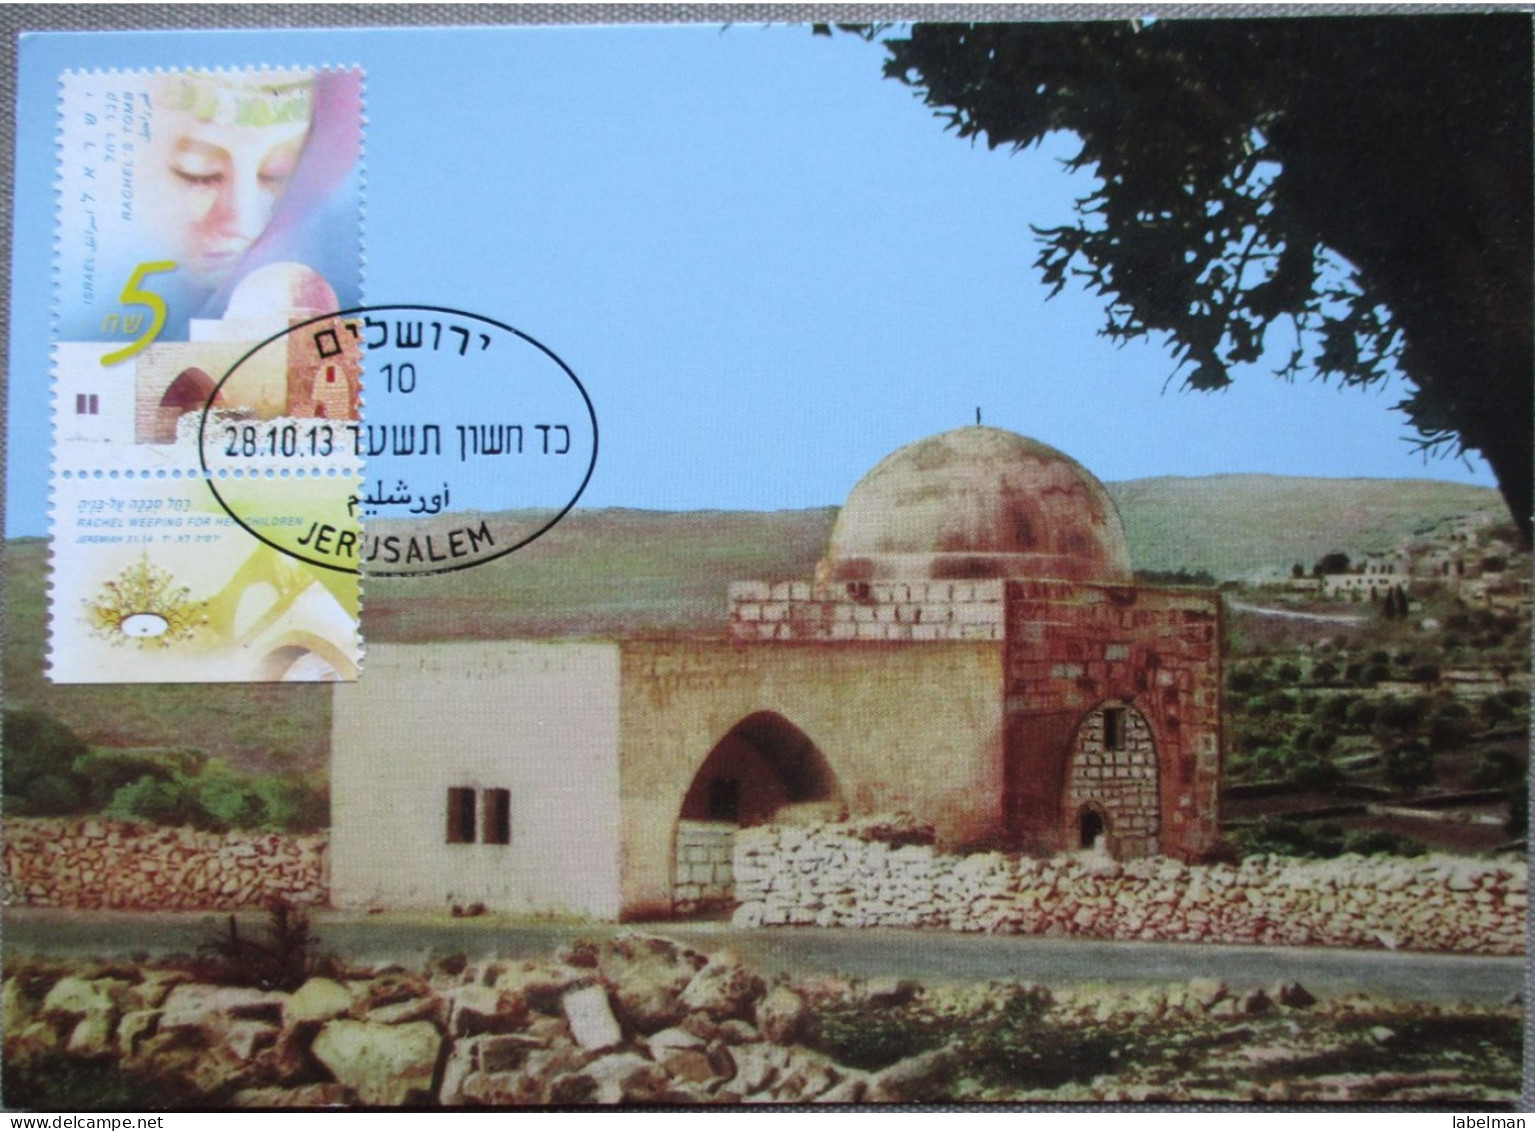 ISRAEL 2013 MAXIMUM CARD POSTCARD BETHLEHEM RACHEL TOMB FIRST DAY OF ISSUE CARTOLINA CARTE POSTALE POSTKARTE CARTOLINA - Maximumkarten